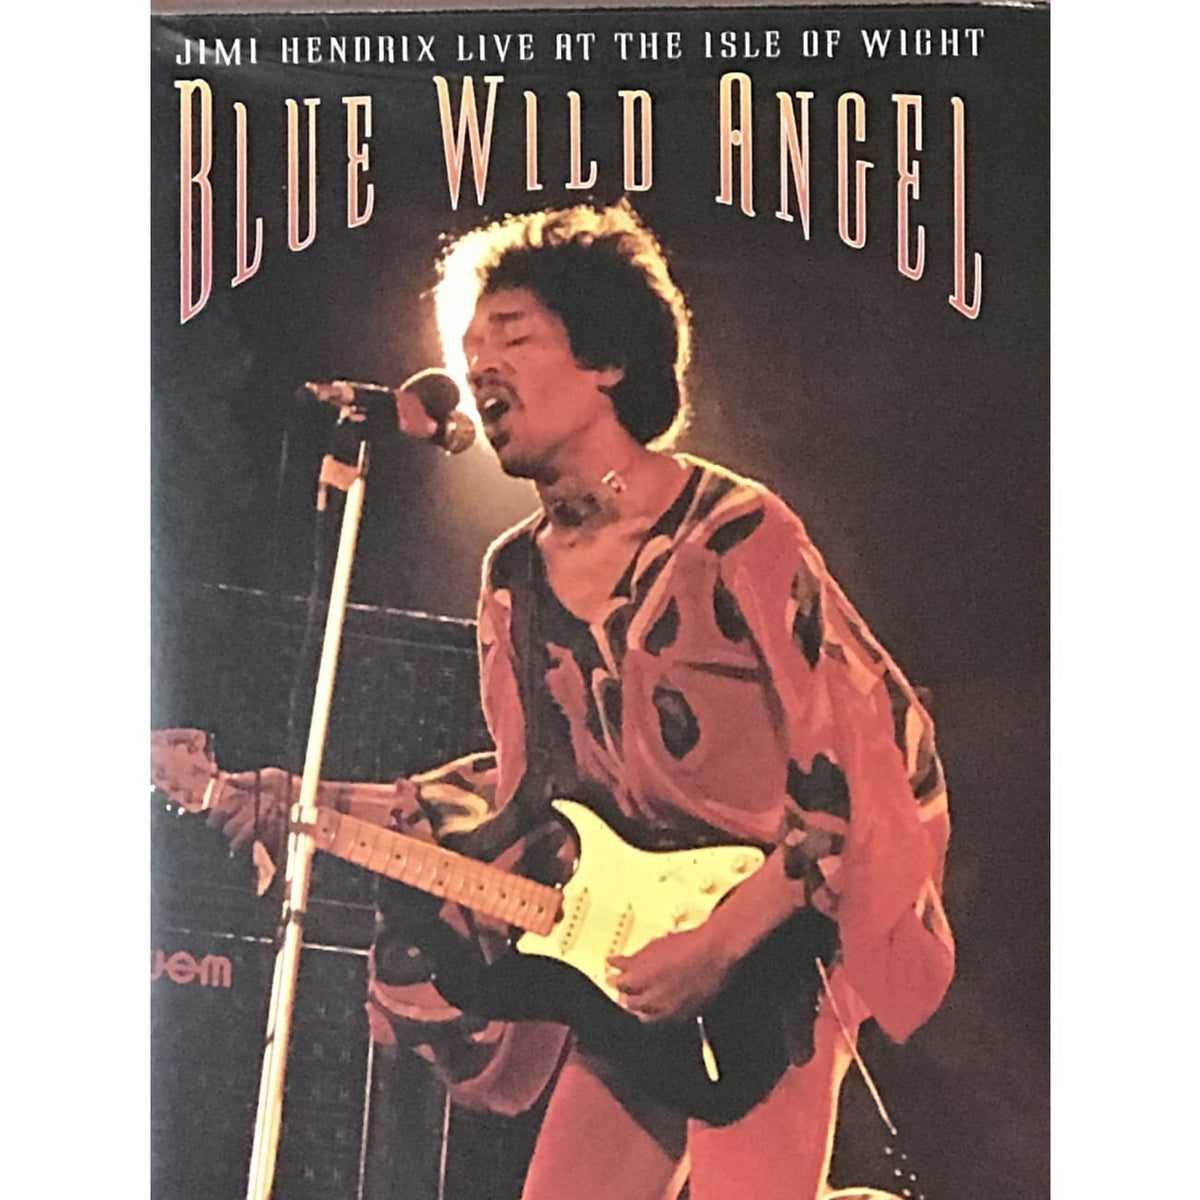 Blue Wild Angel: Jimi Hendrix Live At The Isle Of Wight [Blu-ray ...